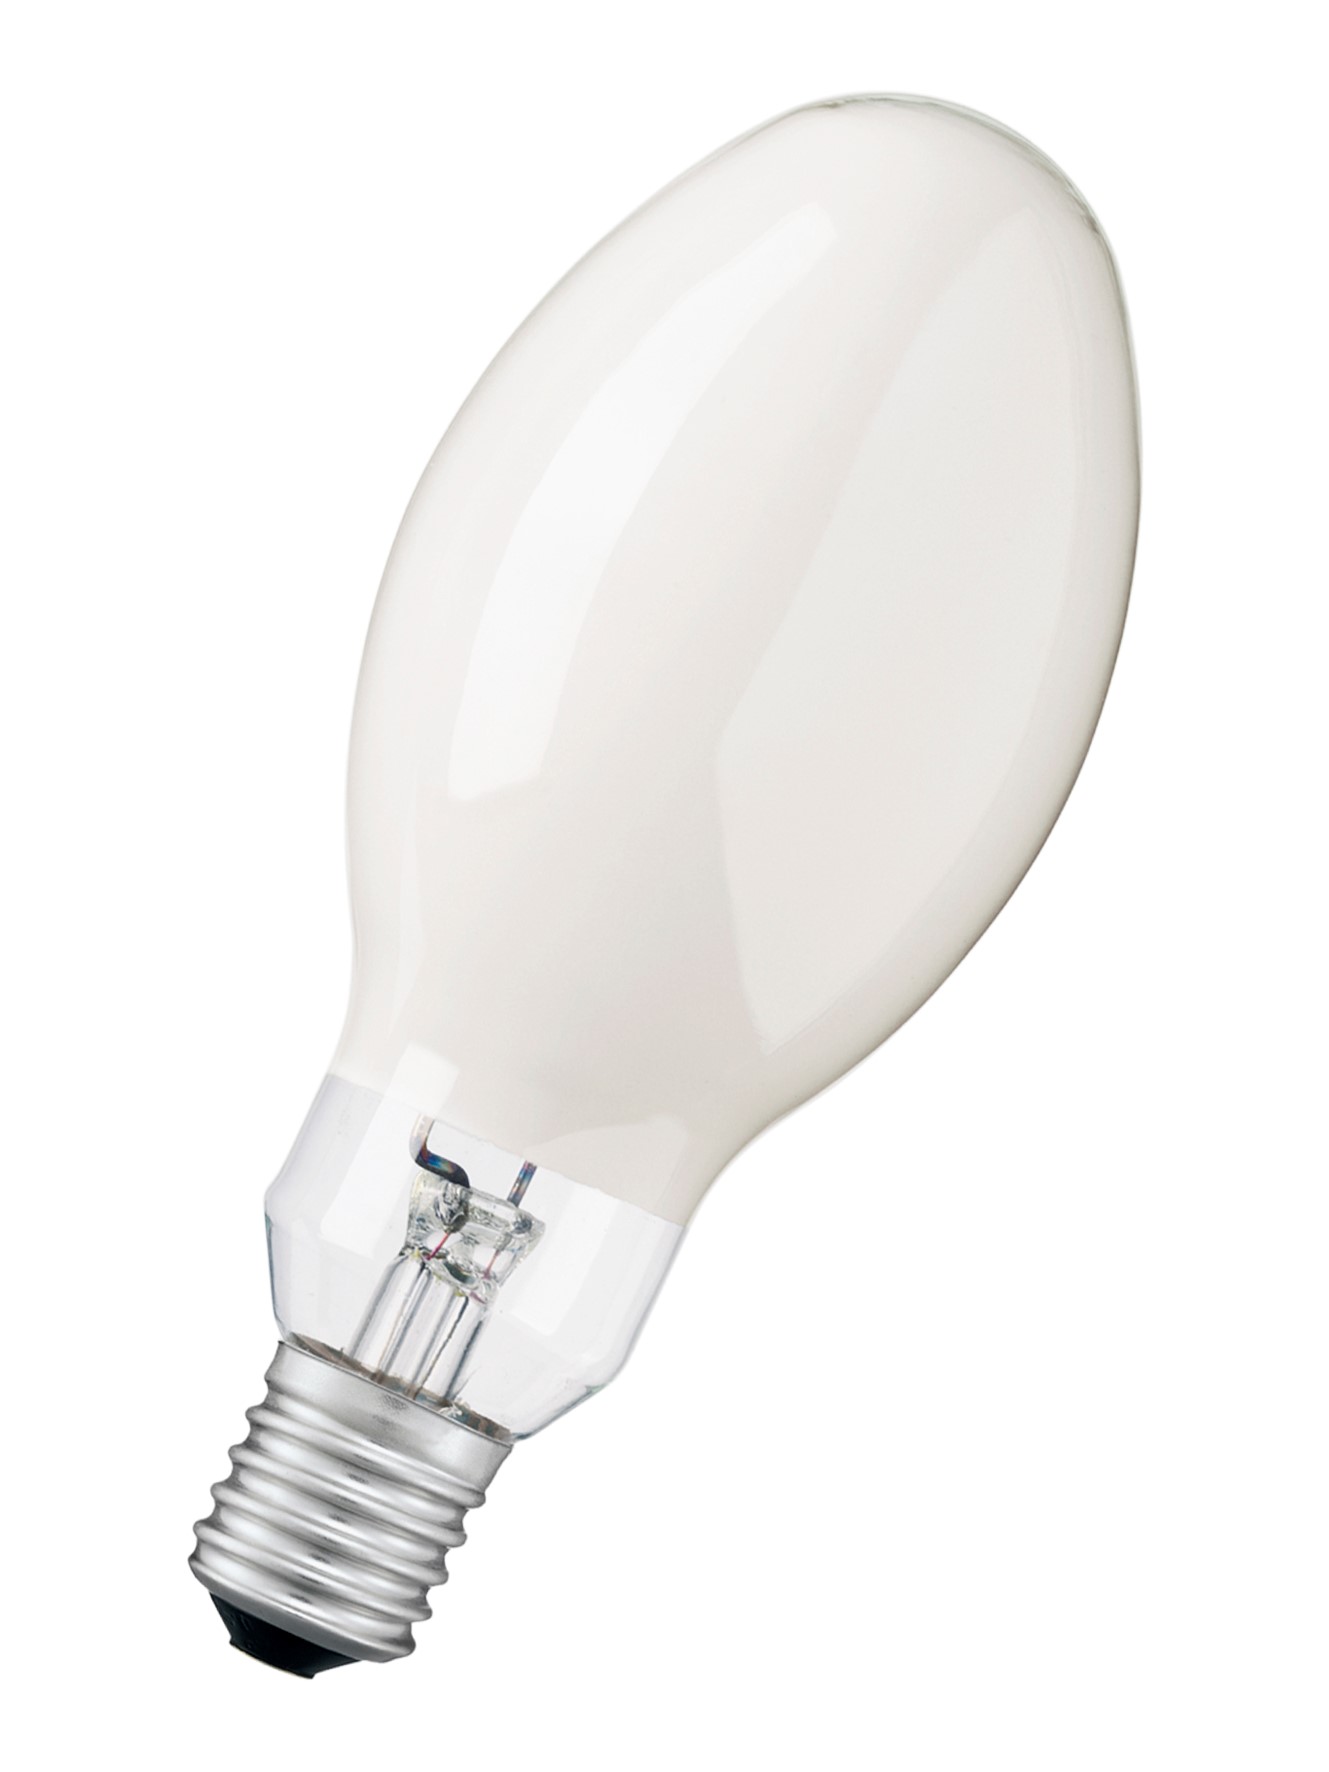 8x 160W Pearl BHPM Ballast Mercury Vapour Lamp Light Bulb ES E27 Edison Screw